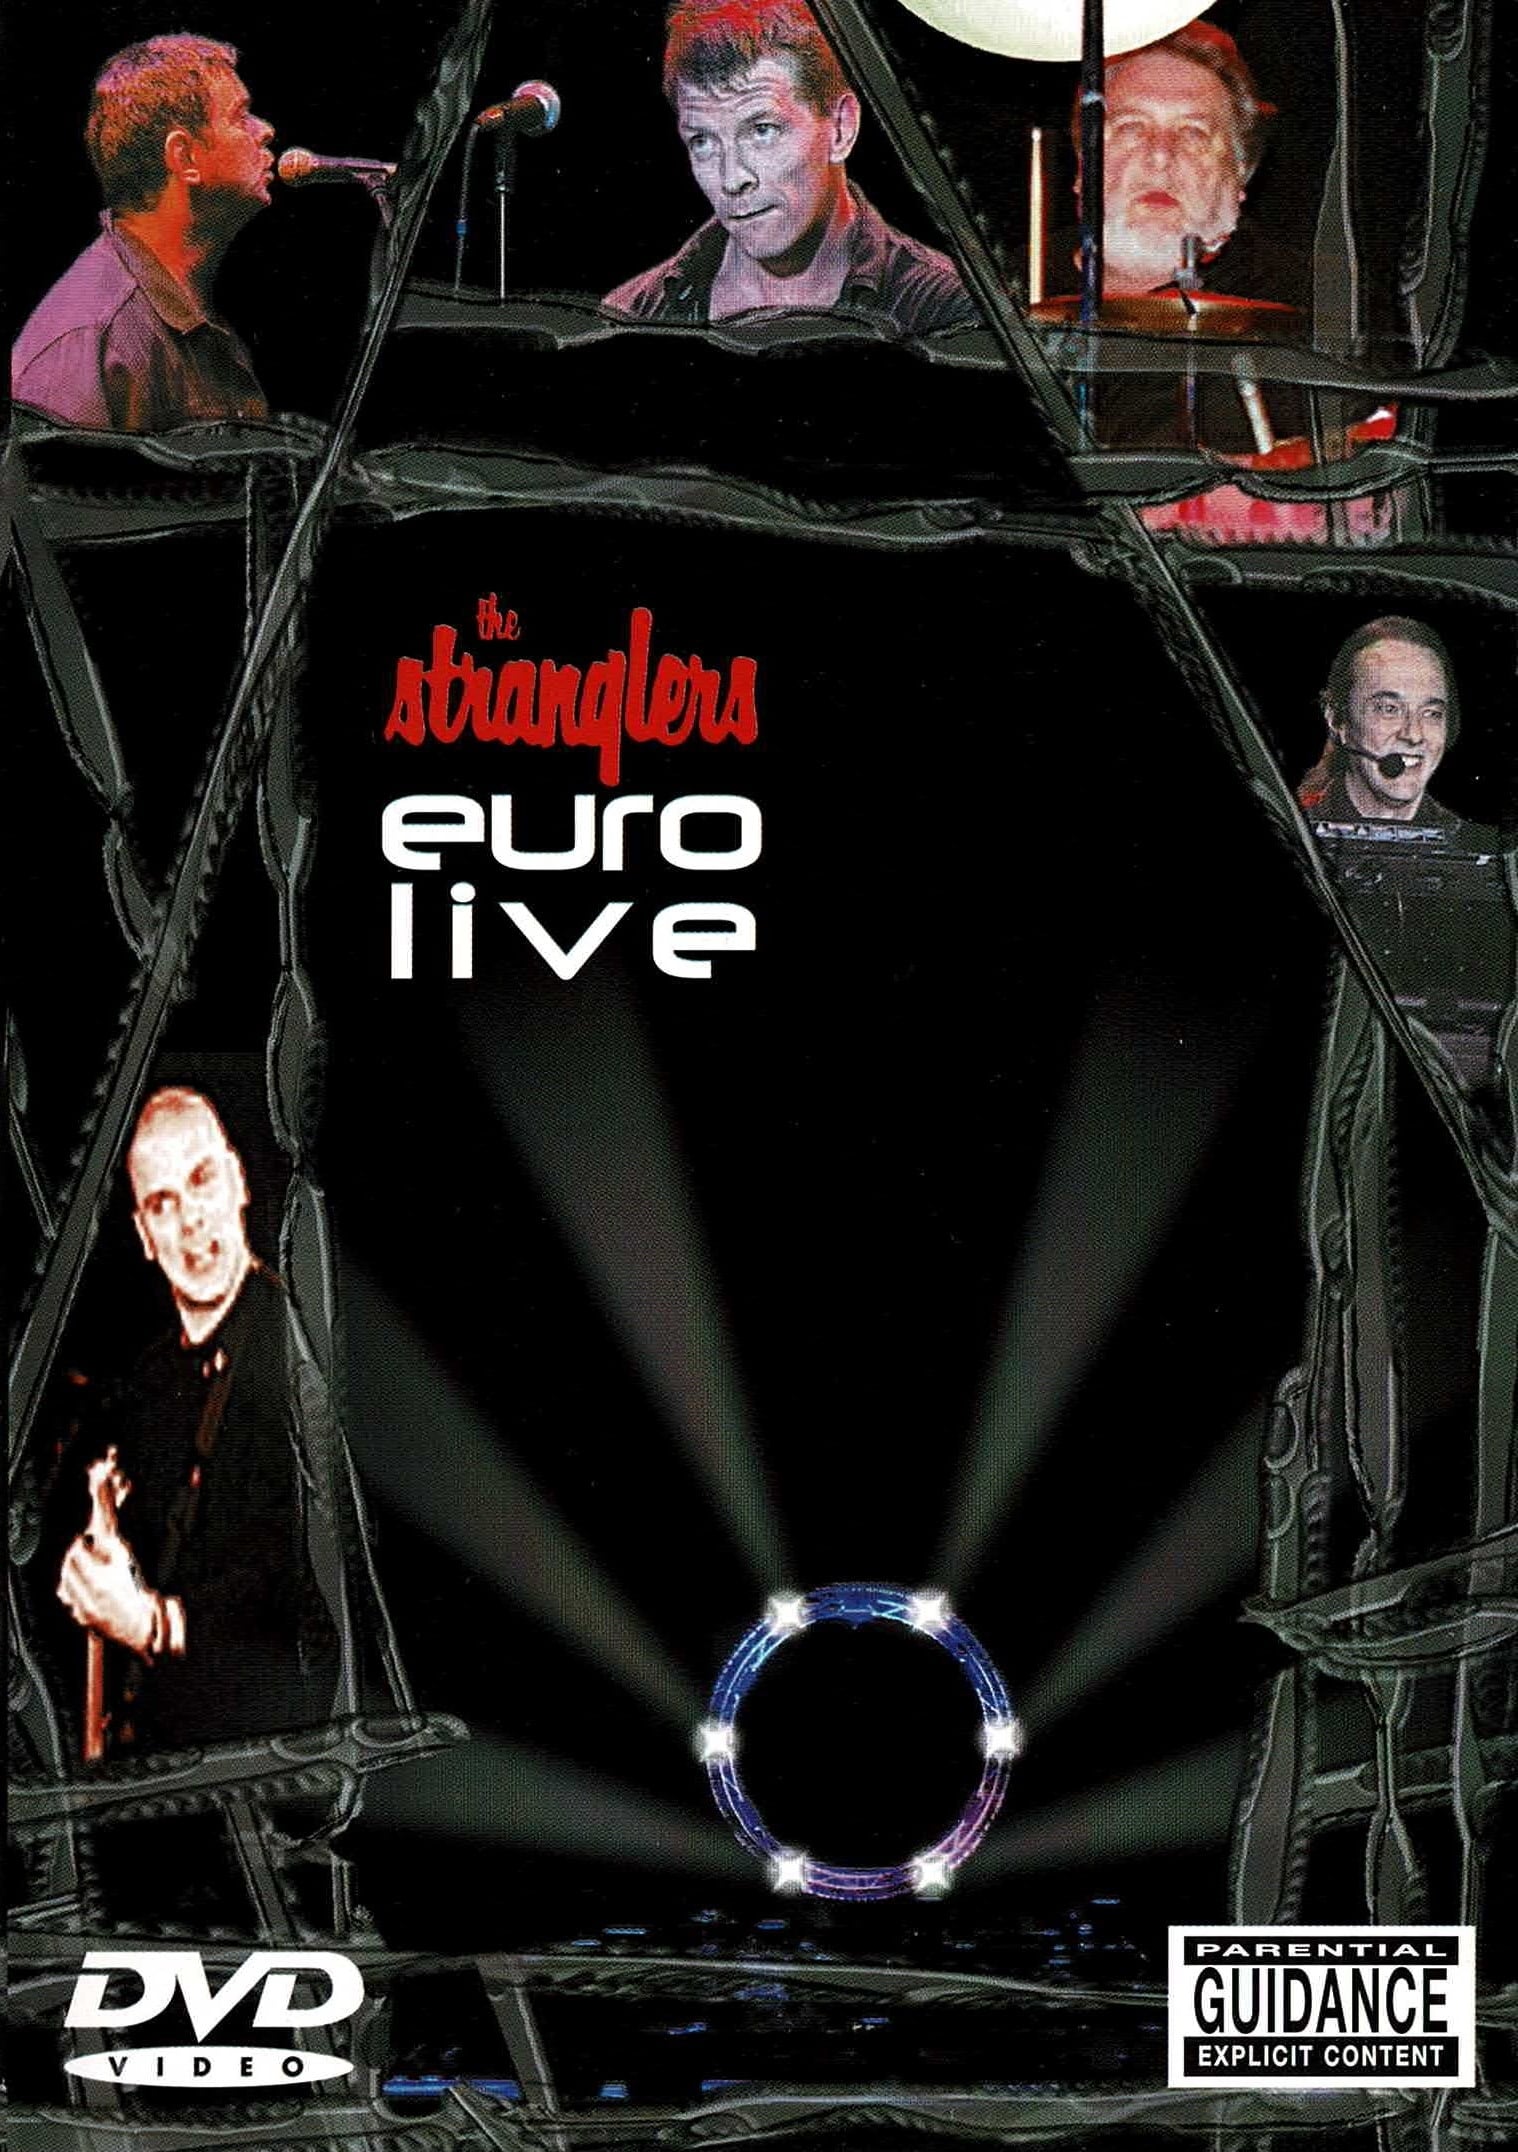 The Stranglers: Euro Live